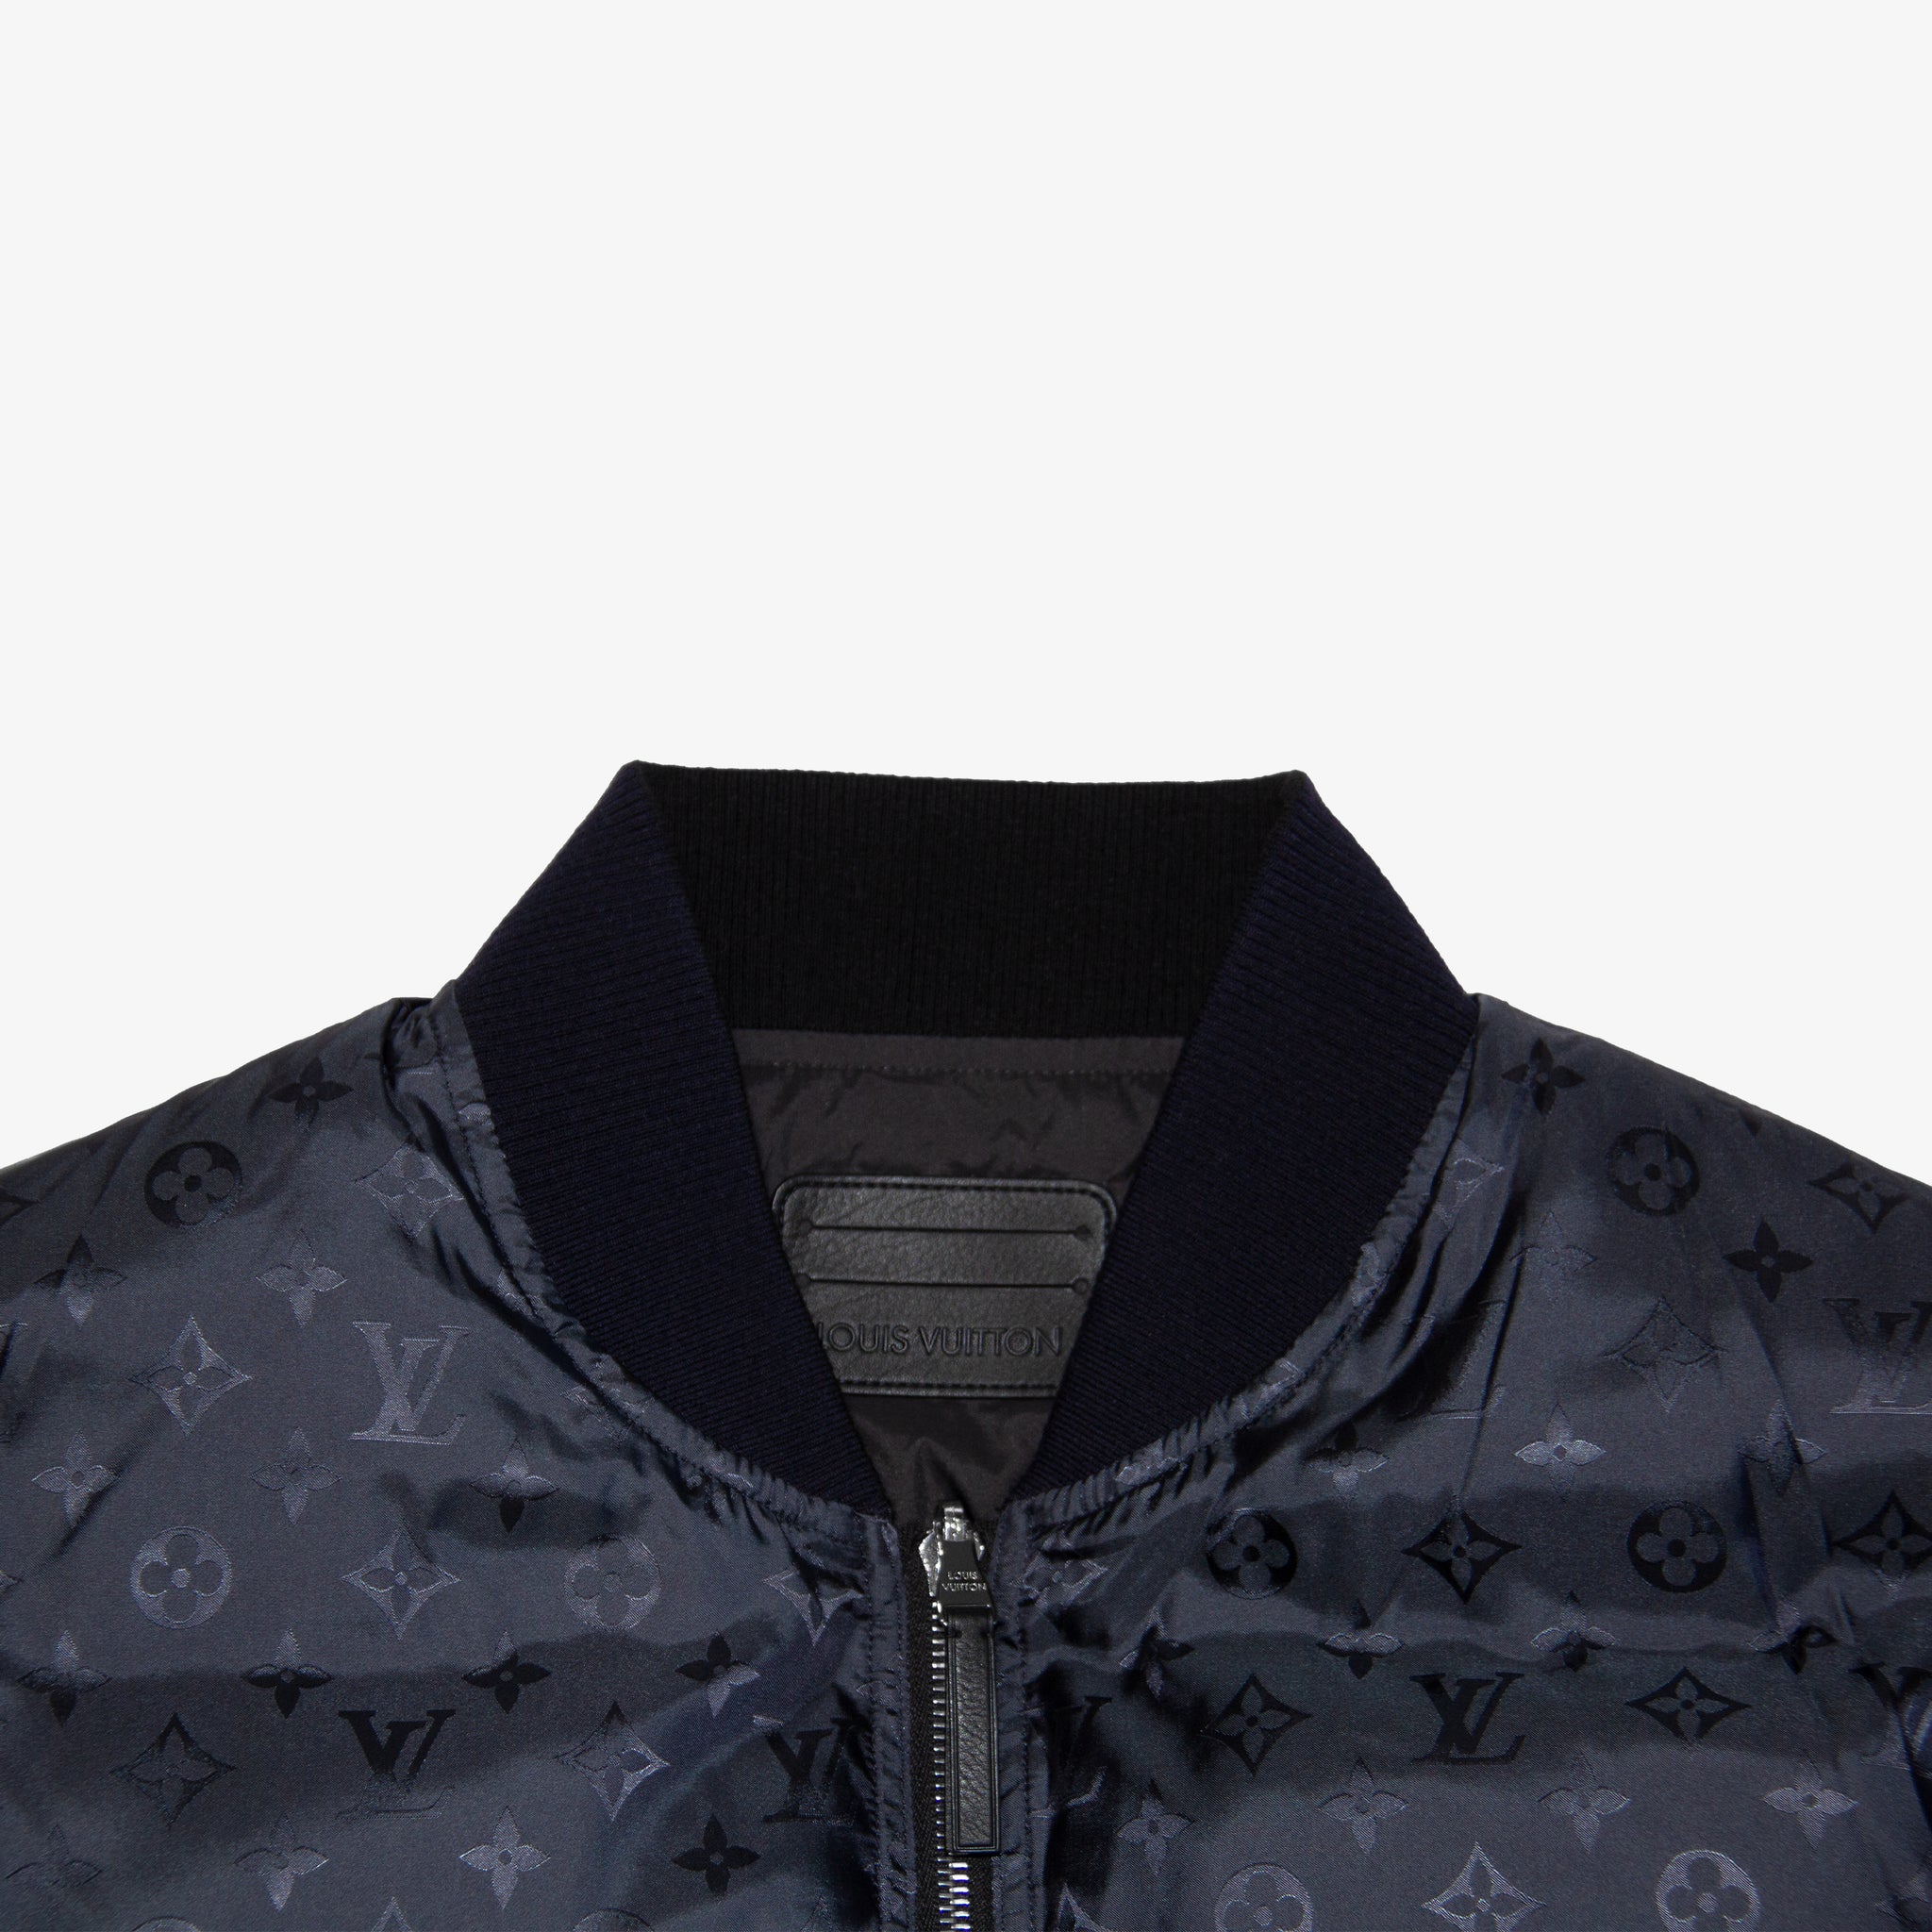 Louis Vuitton Reversible Monogram Windbreaker Jacket Size Large /EU 54